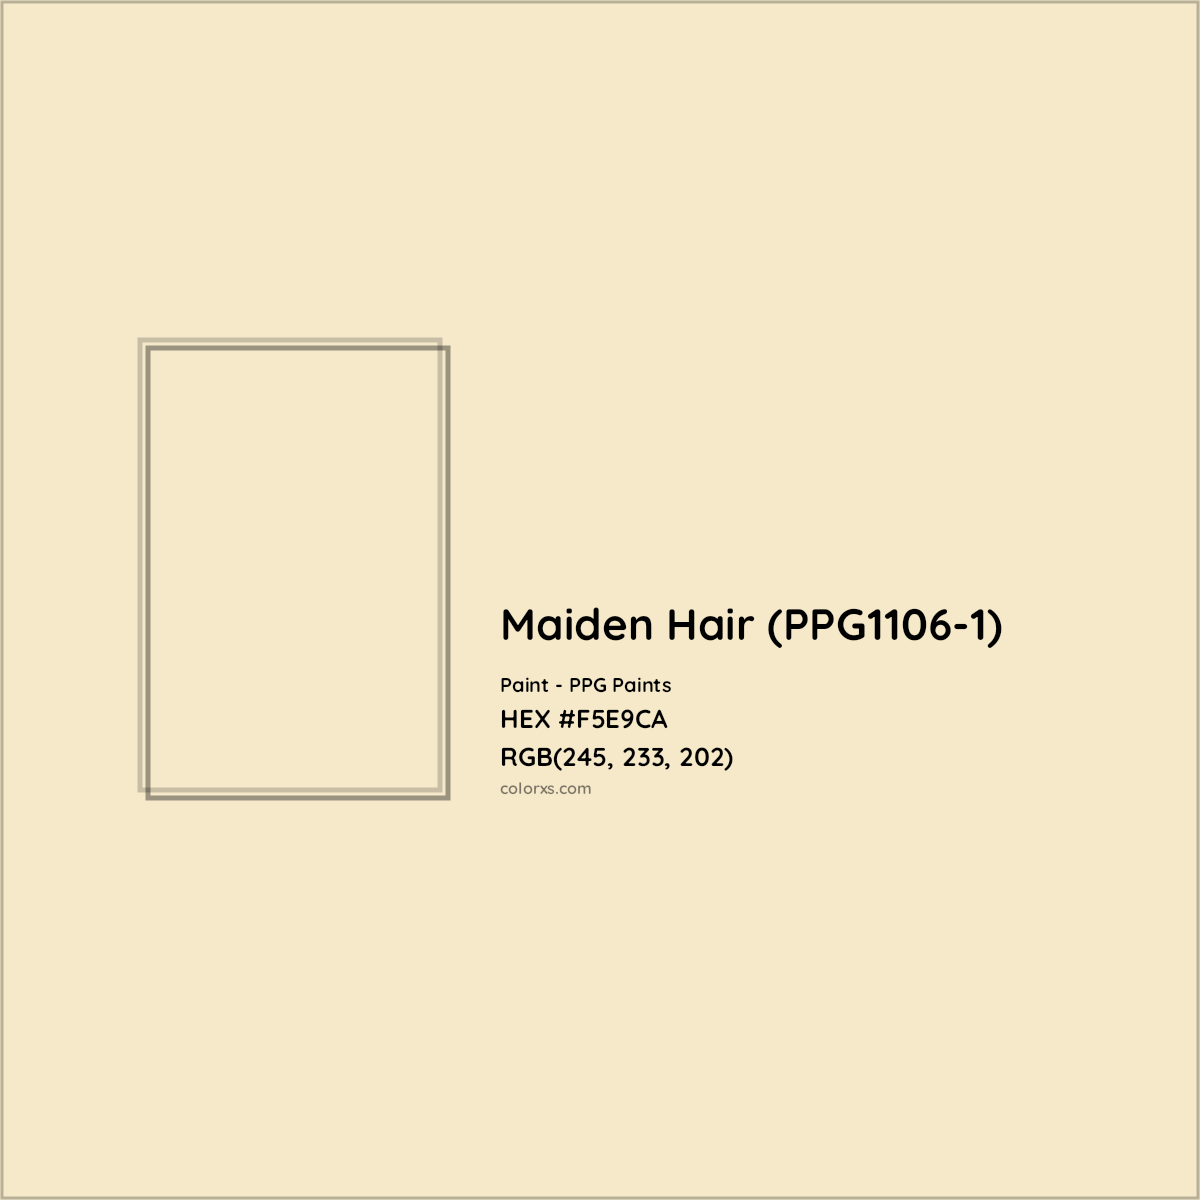 HEX #F5E9CA Maiden Hair (PPG1106-1) Paint PPG Paints - Color Code